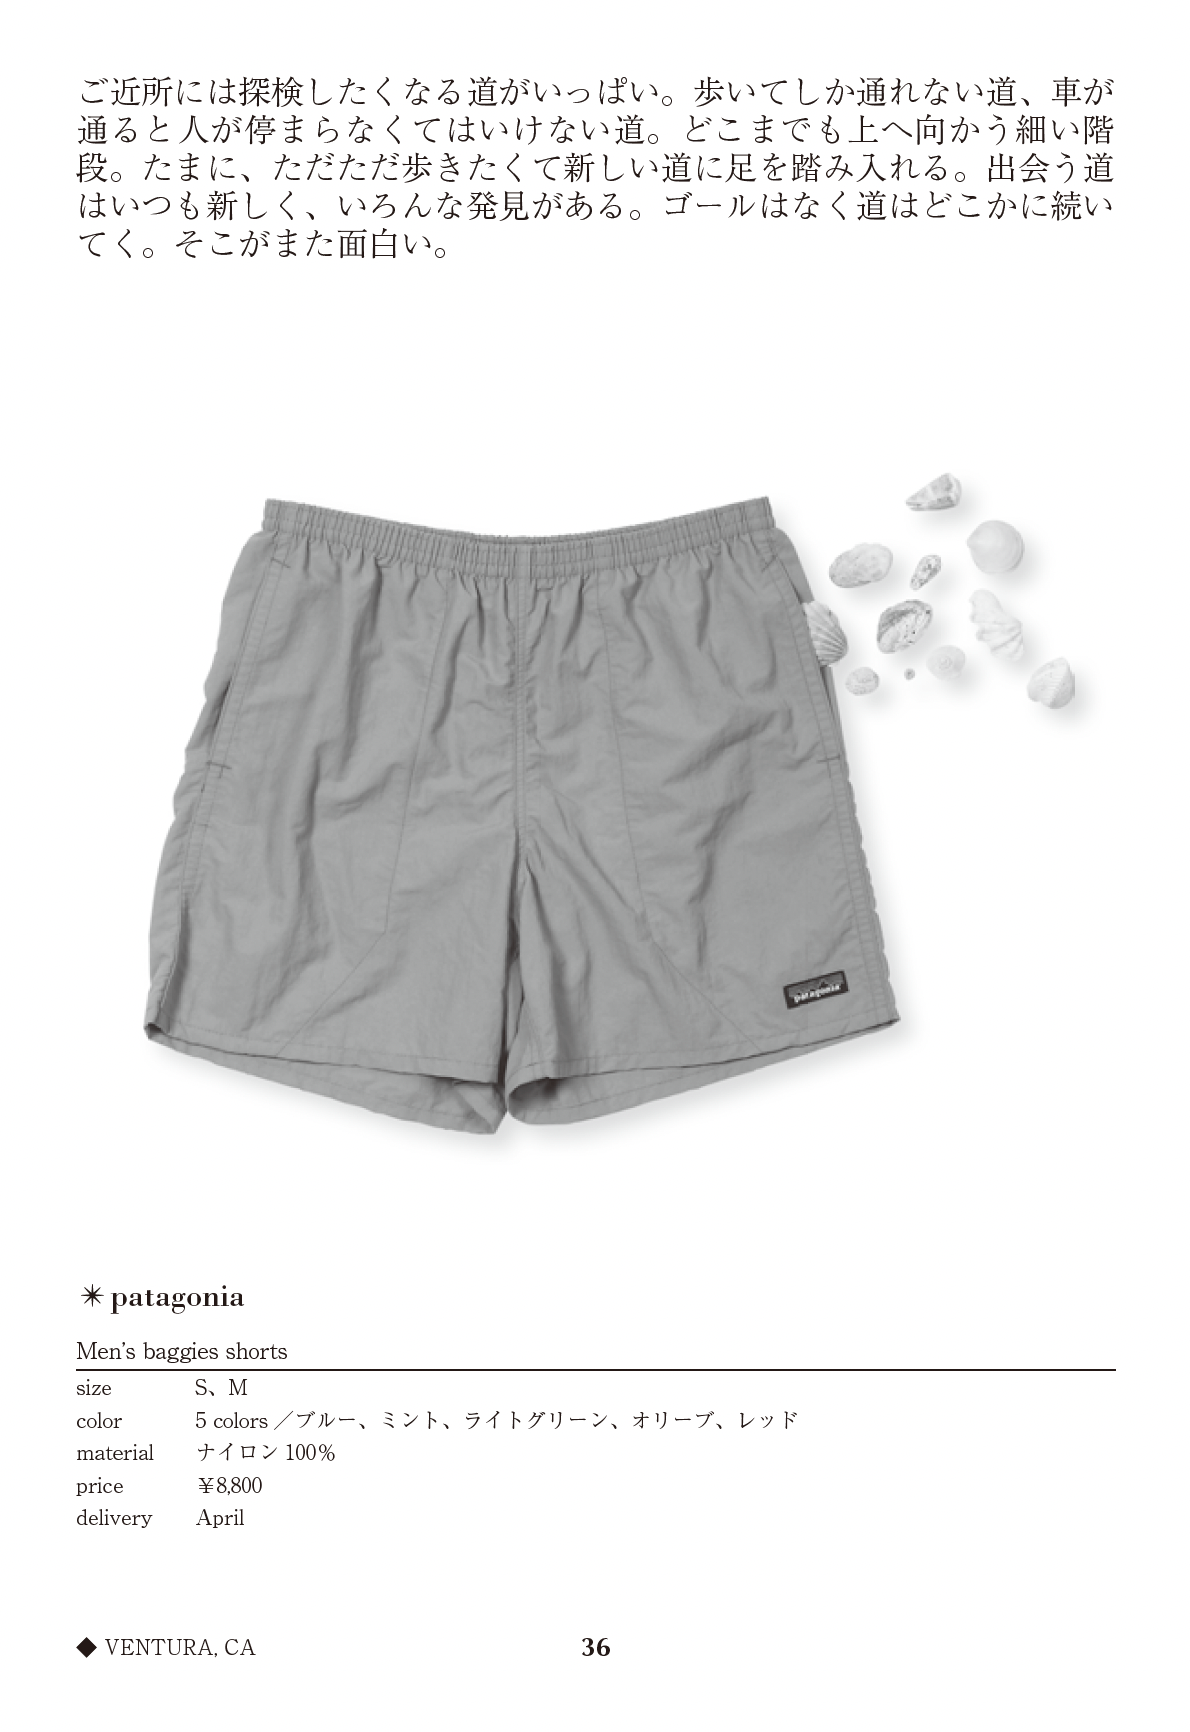 Men’s baggies shorts